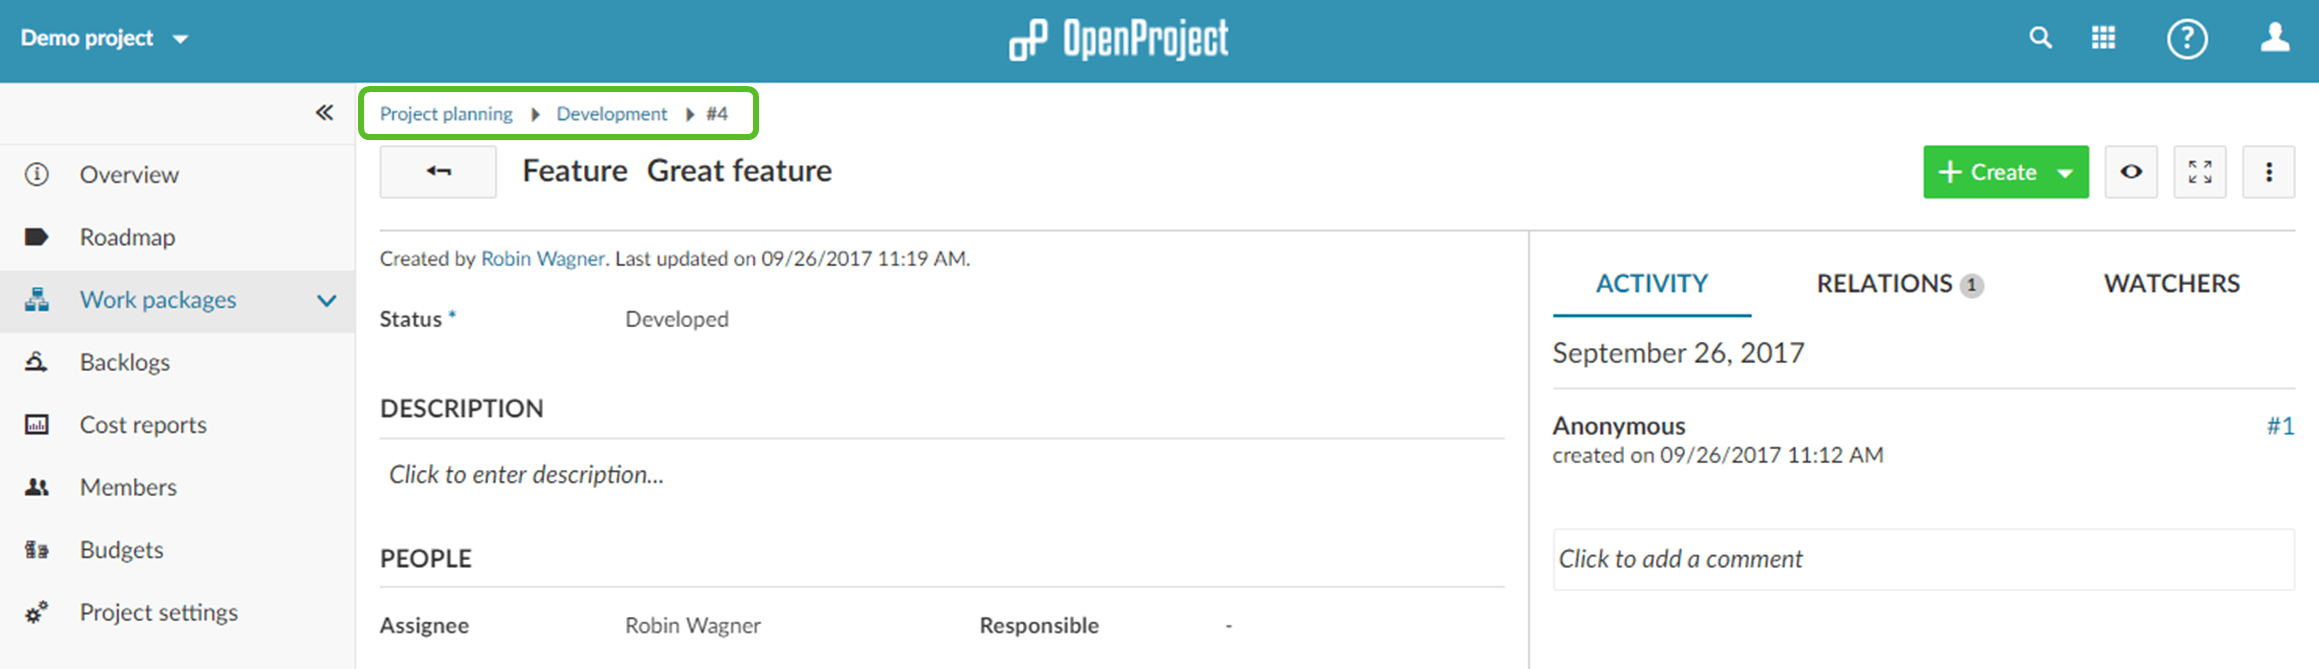 OpenProject 7.3: Breadcrumb